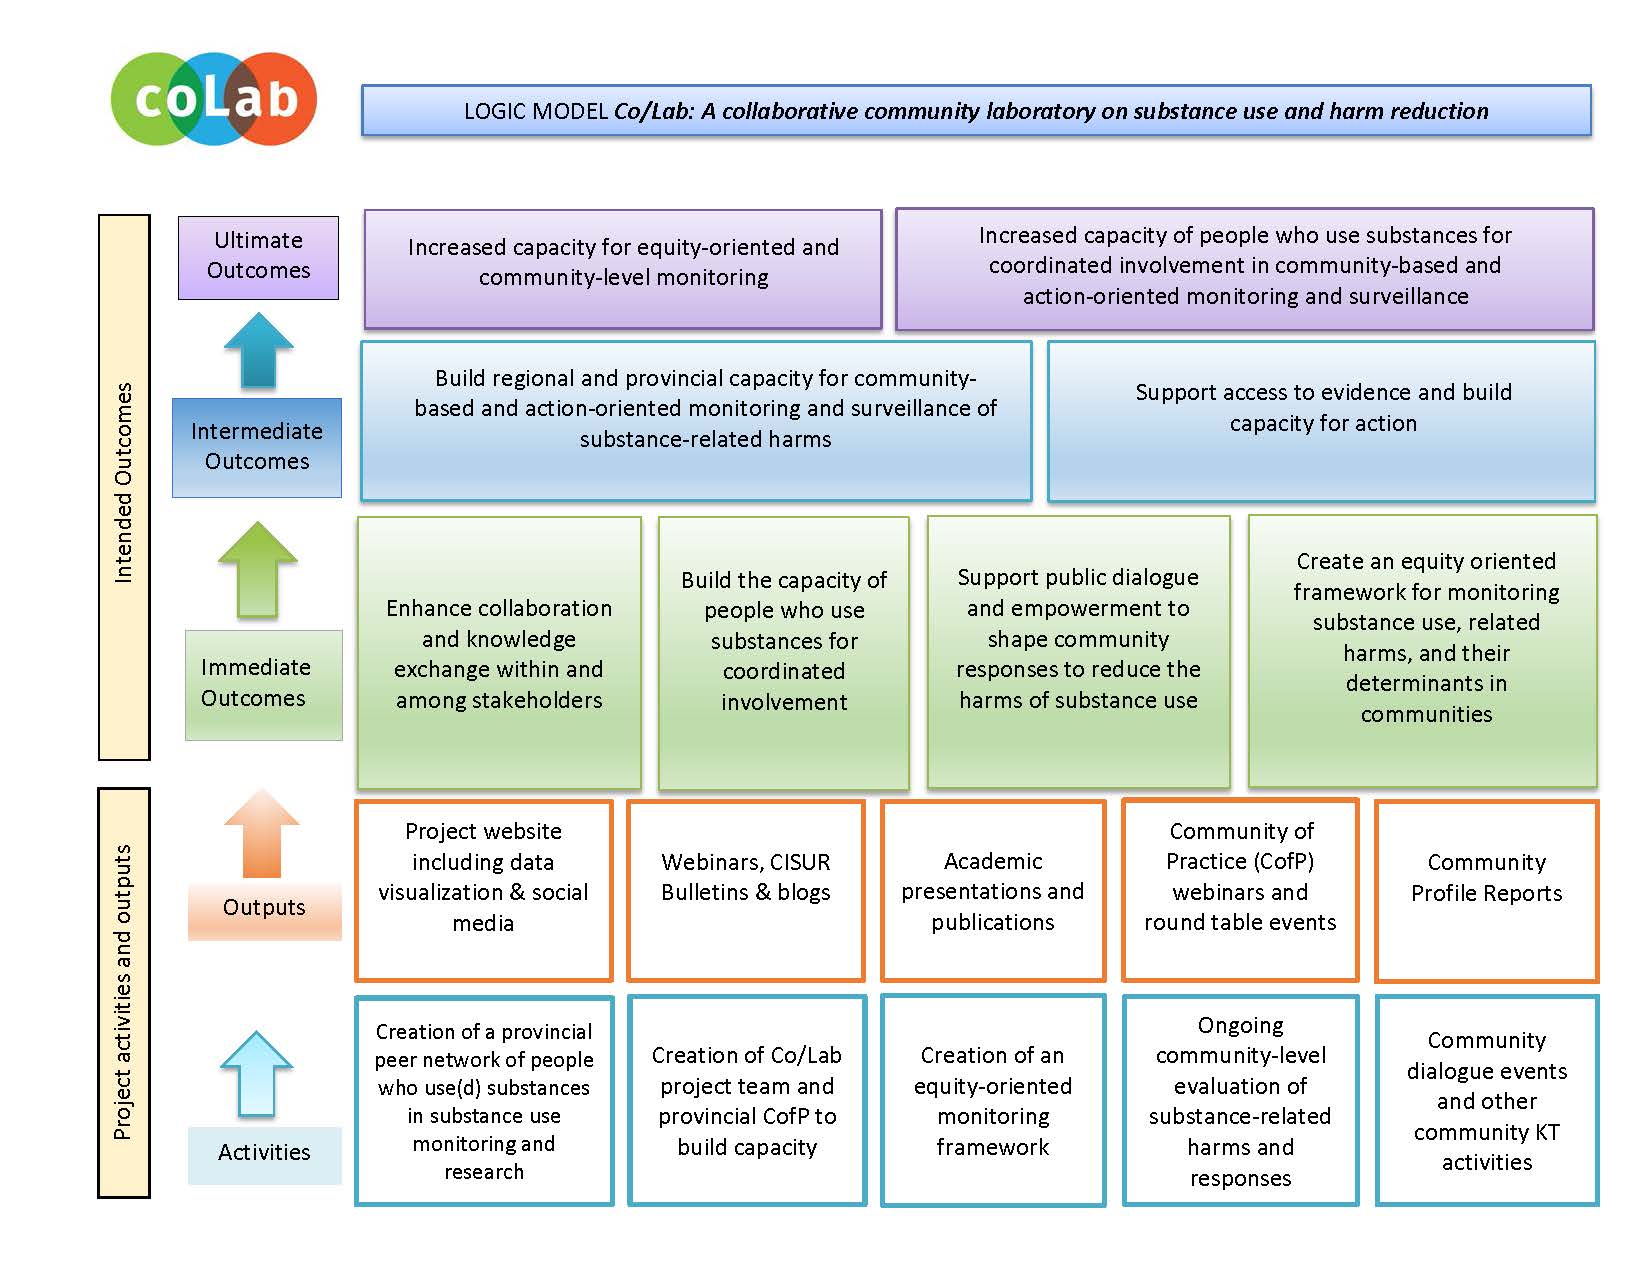 The Co/Lab logic model